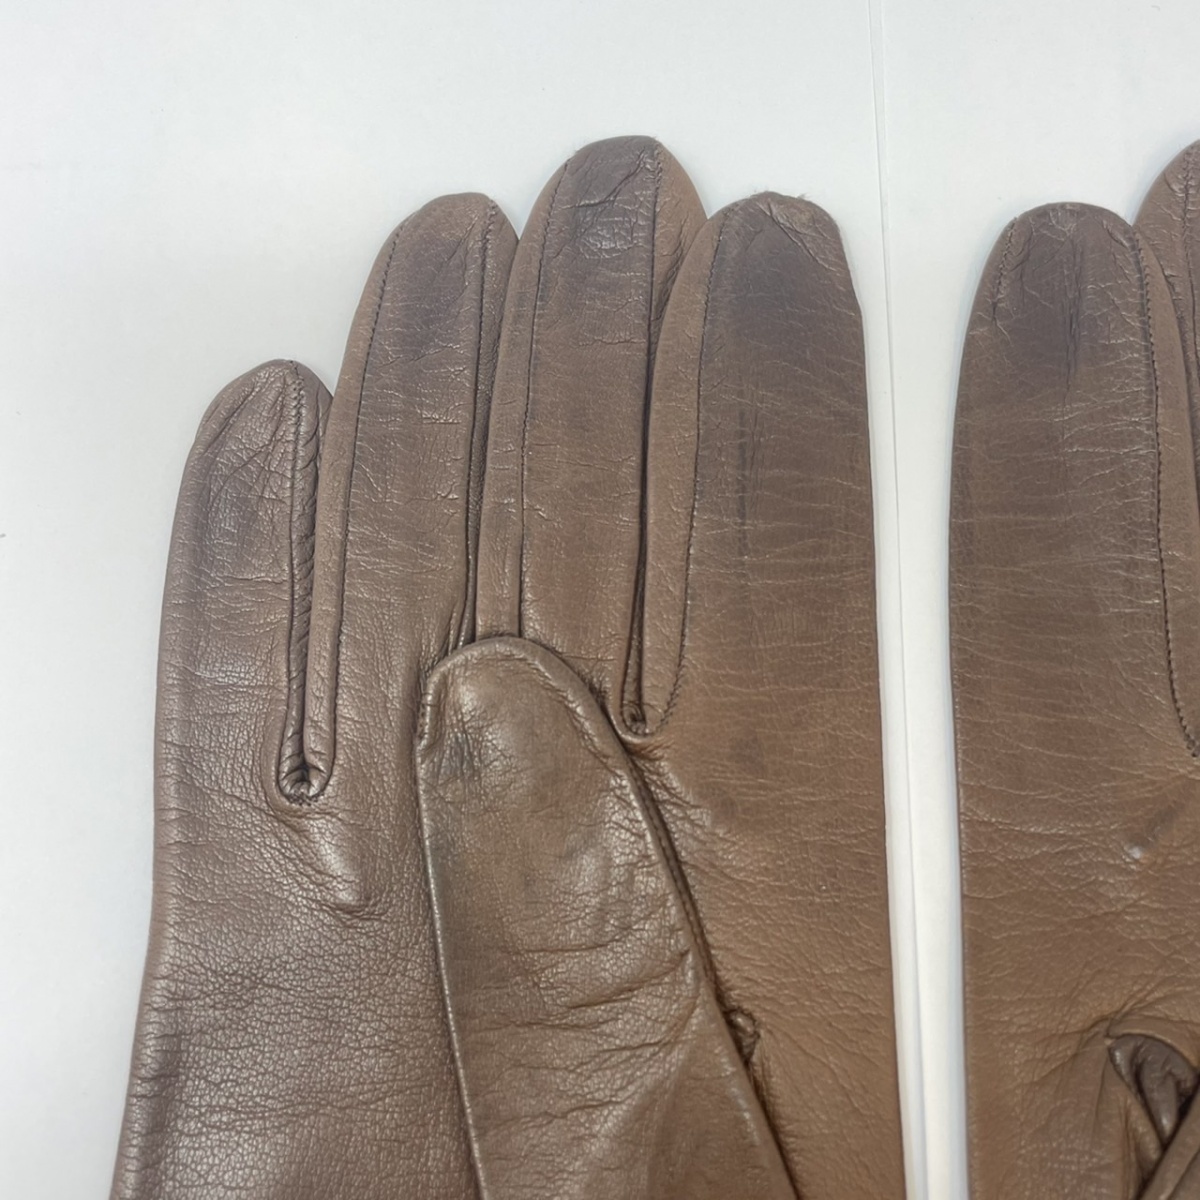 Madova GLOVESmadova lady's glove leather re zha cai z:7ita rear made tea Brown 